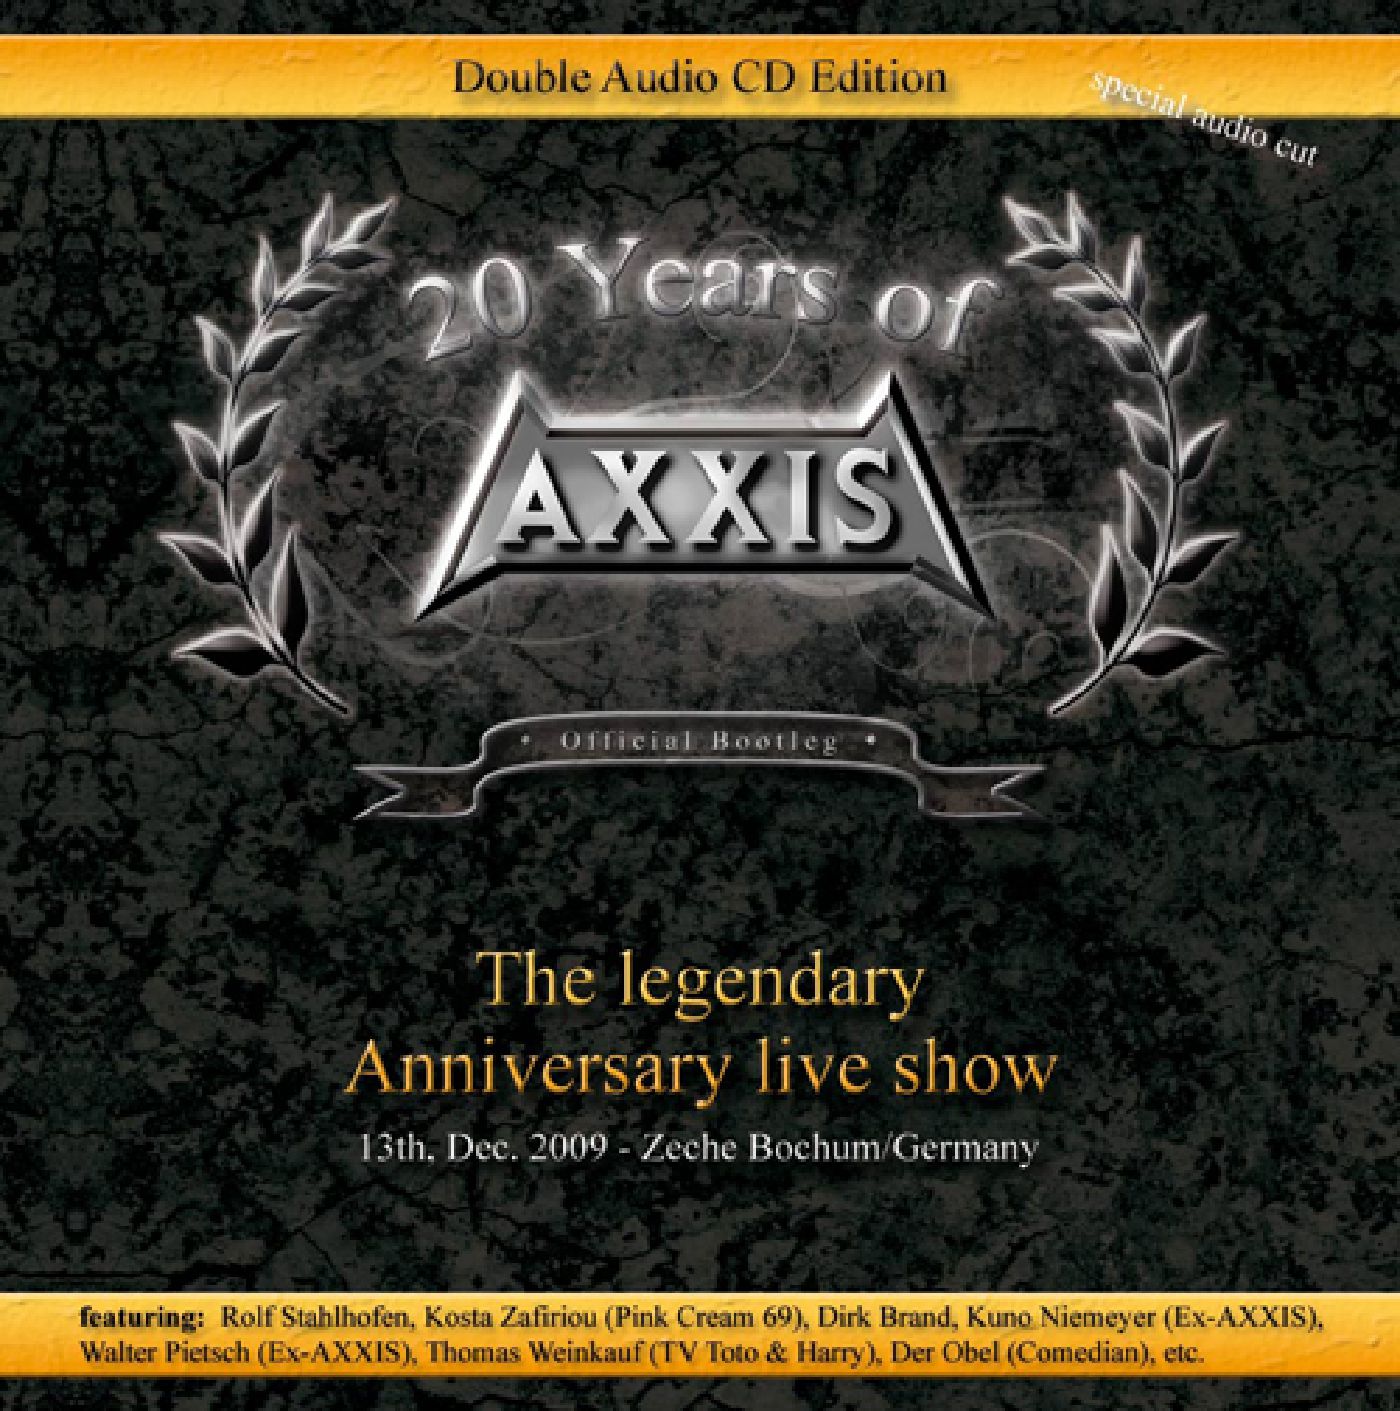 AXXIS 20 years CD